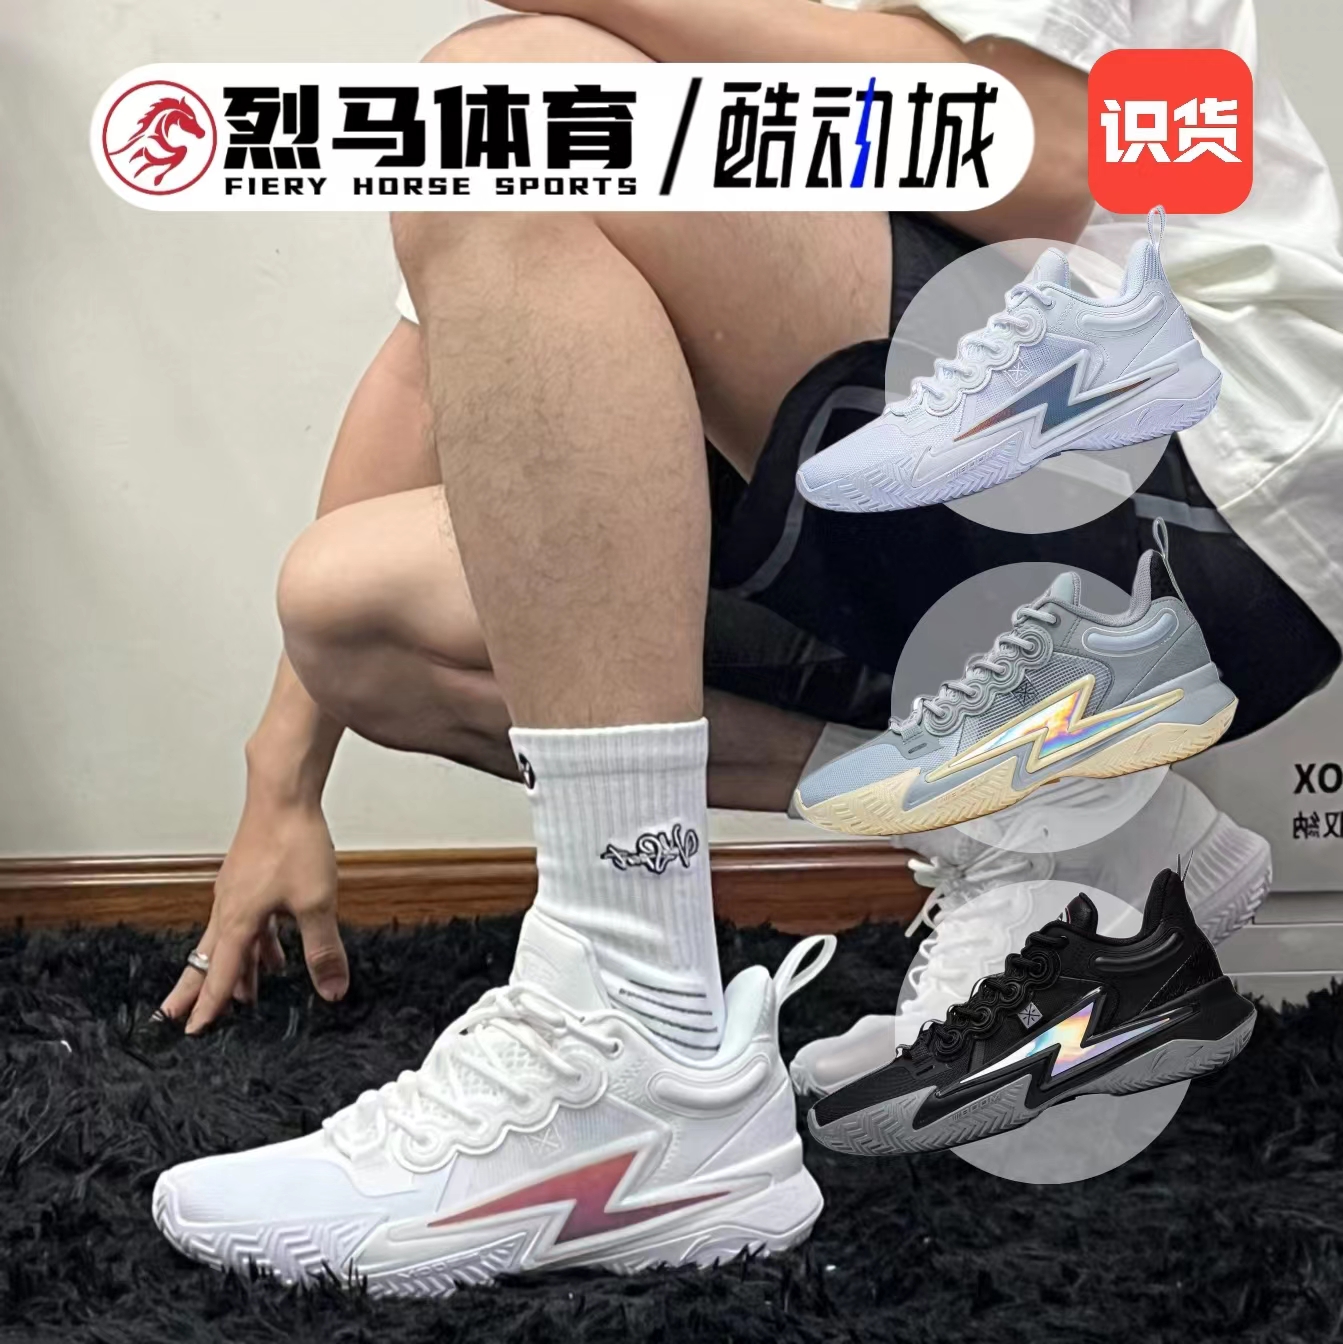 Lining李宁 闪电之子 白色 男子低帮实战耐气新款篮球鞋ABPT019-6